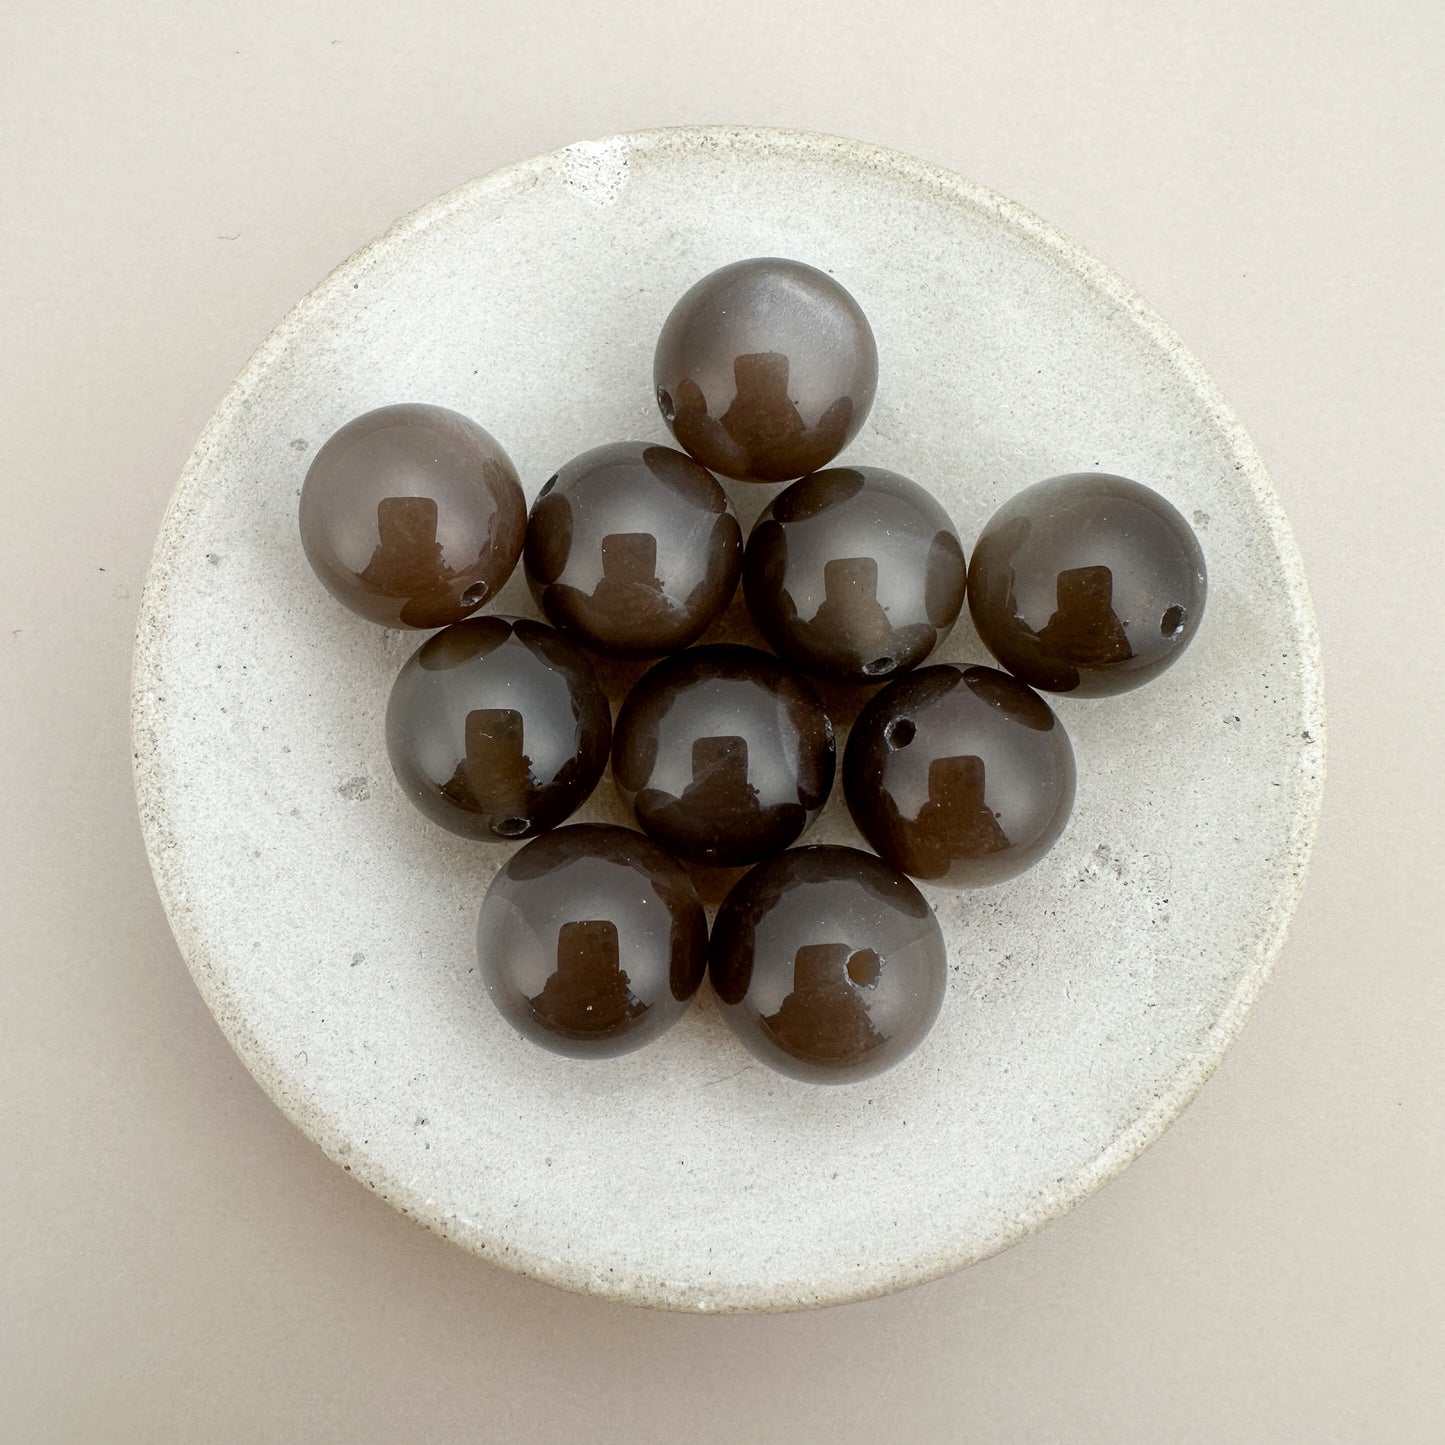 Chocolate Moonstone 12mm Smooth Round Bead - 1 pc. (P3110)